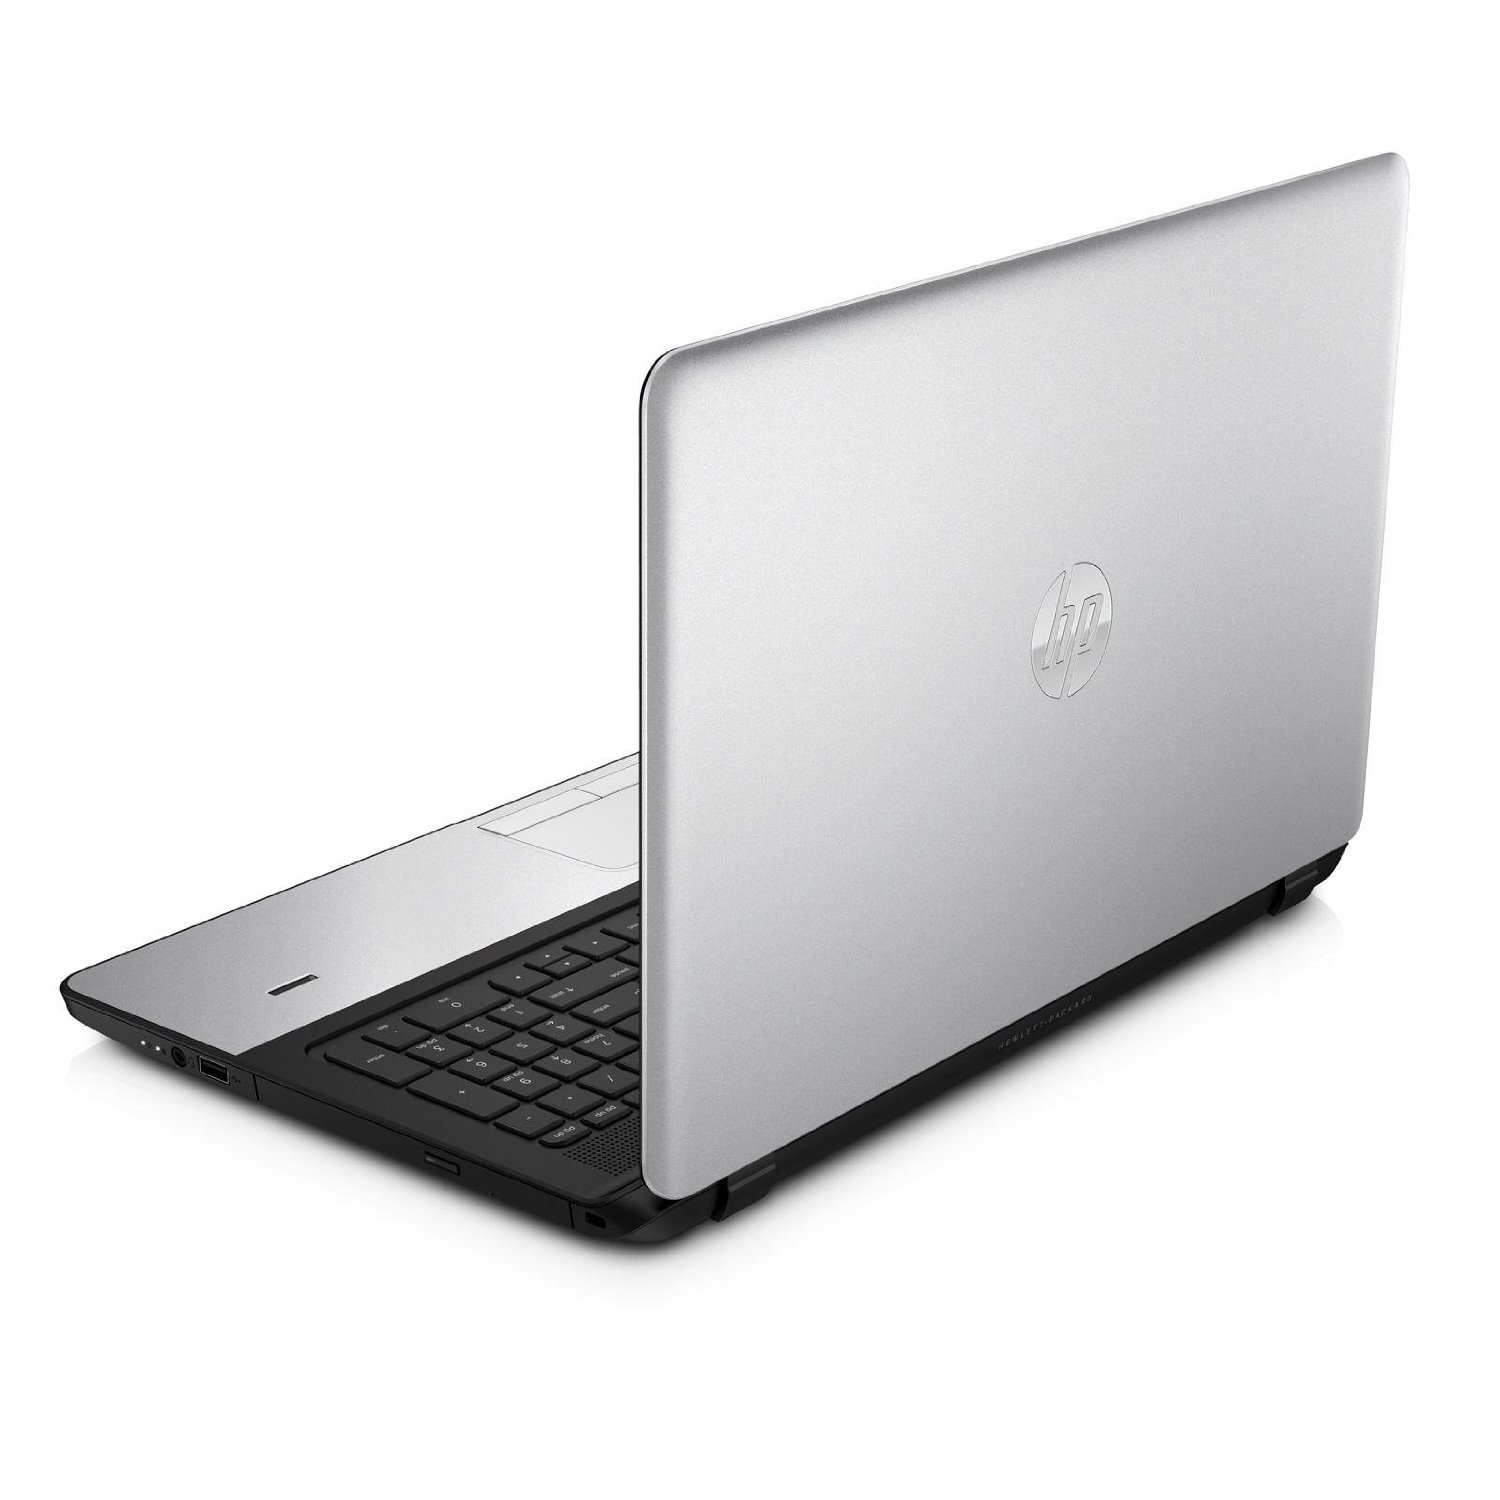 Laptop HP 350 G2 N2N03PA - Intel Core i3 4005U 1.7Ghz, 4Gb RAM, 500Gb HDD, Intel HD Graphics 4400, 15.6Inch